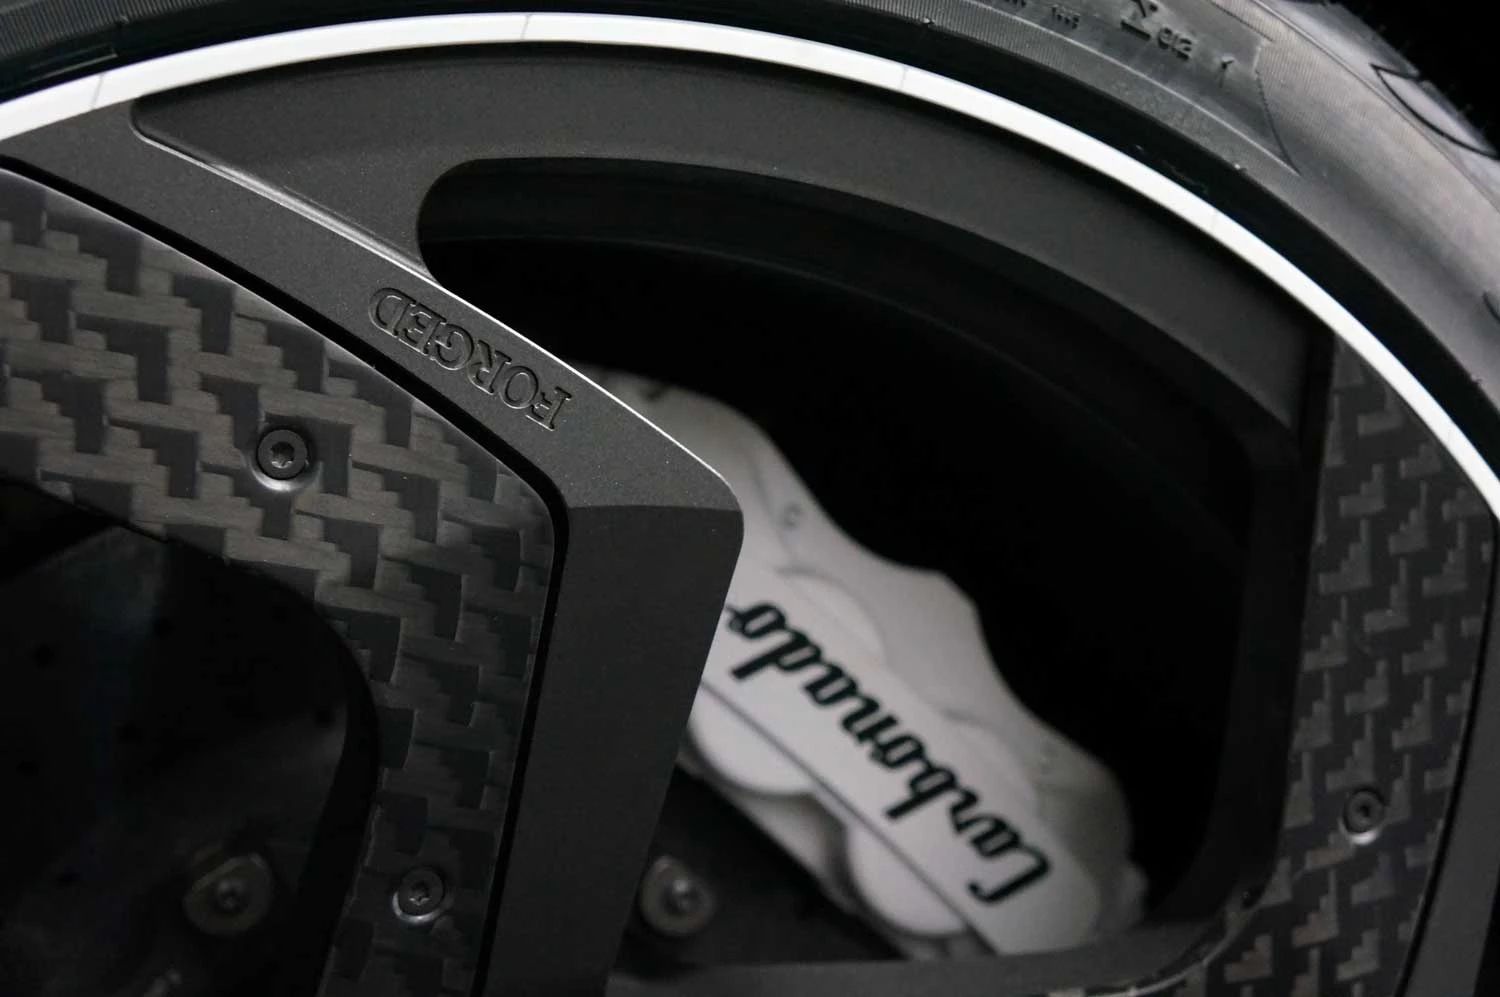 Check our price and buy Mansory Carbon Fiber Body kit set for Lamborghini Aventador Carbonado